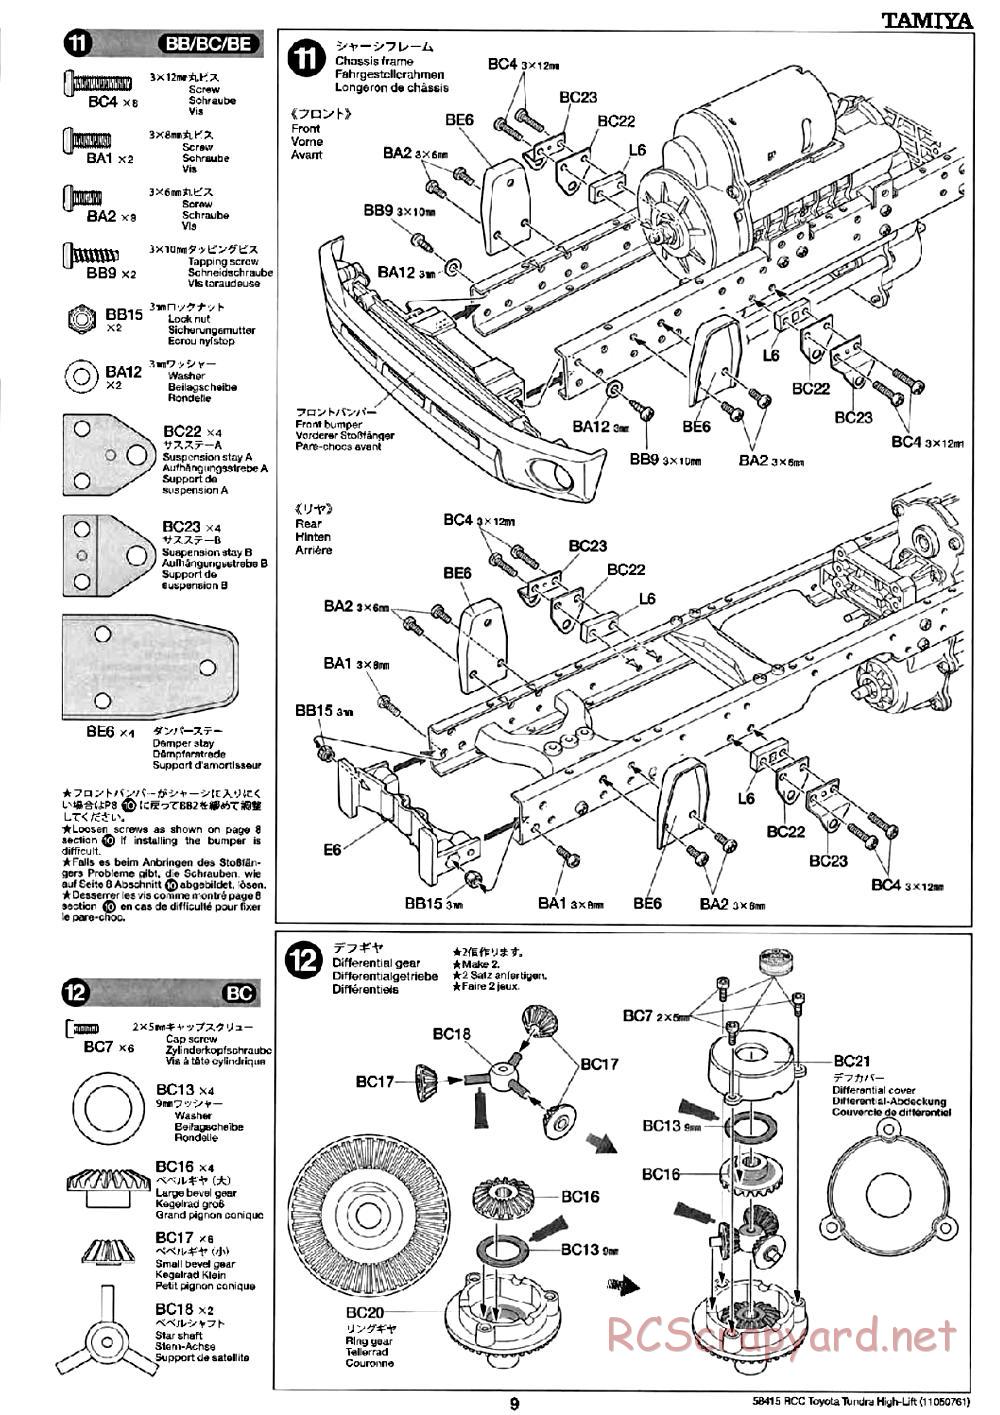 Tamiya - Toyota Tundra High-Lift Chassis - Manual - Page 9